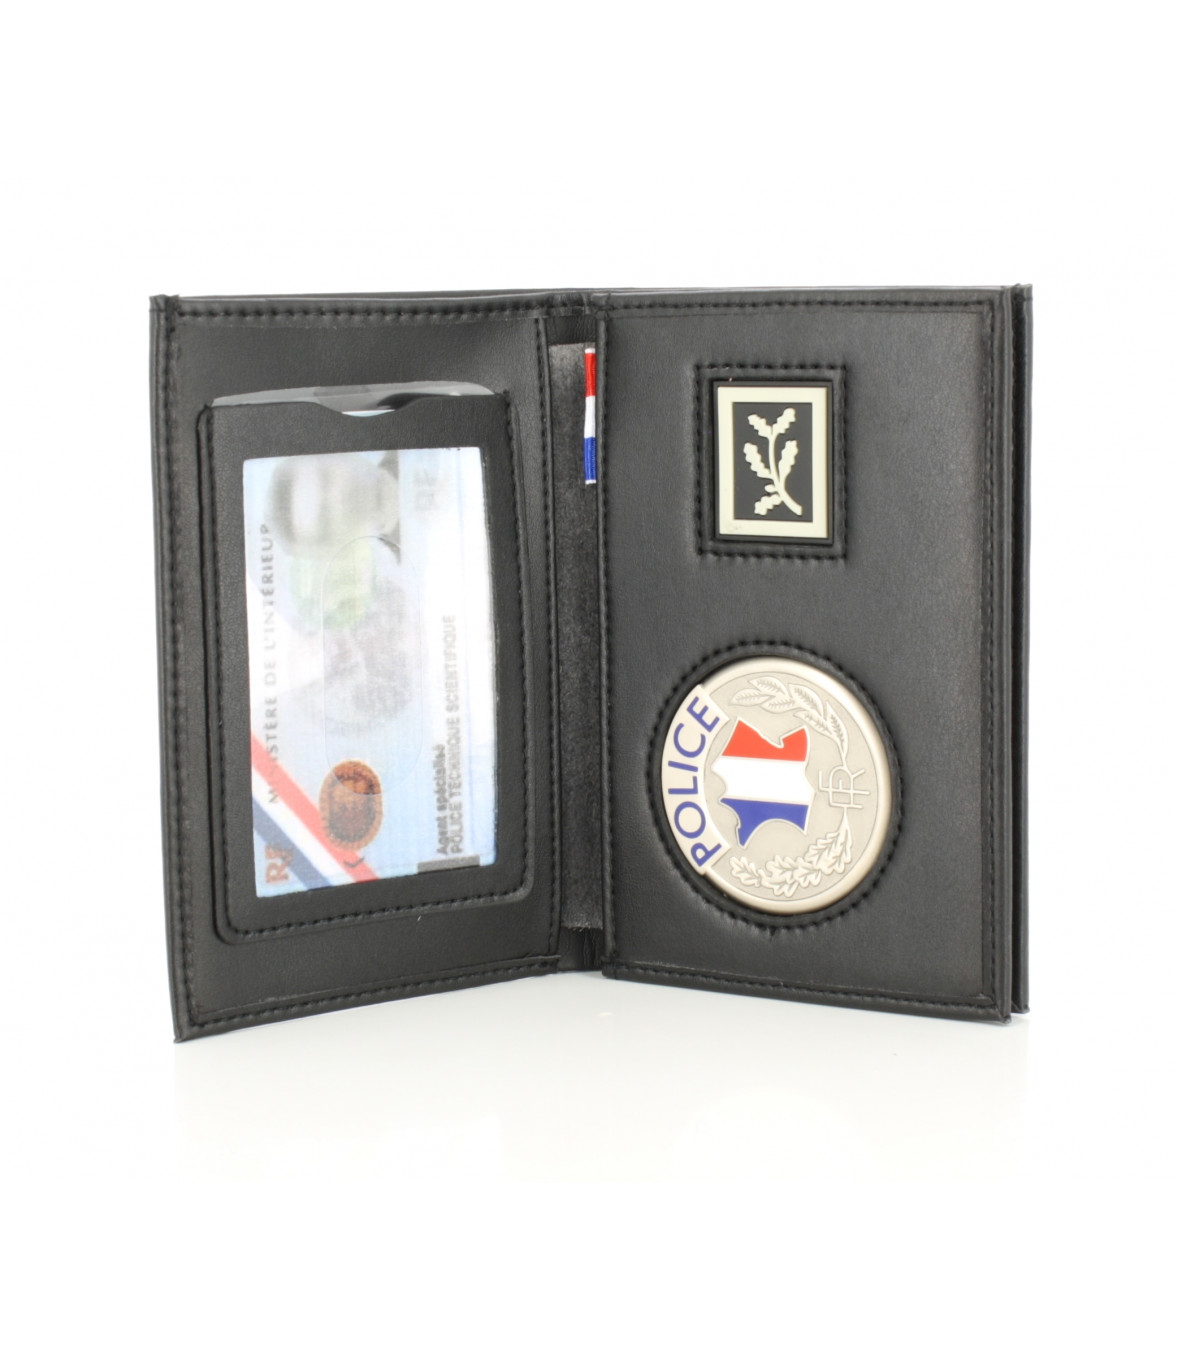 porte-carte Police RF 3 volets médaille et grade, cuir véritable